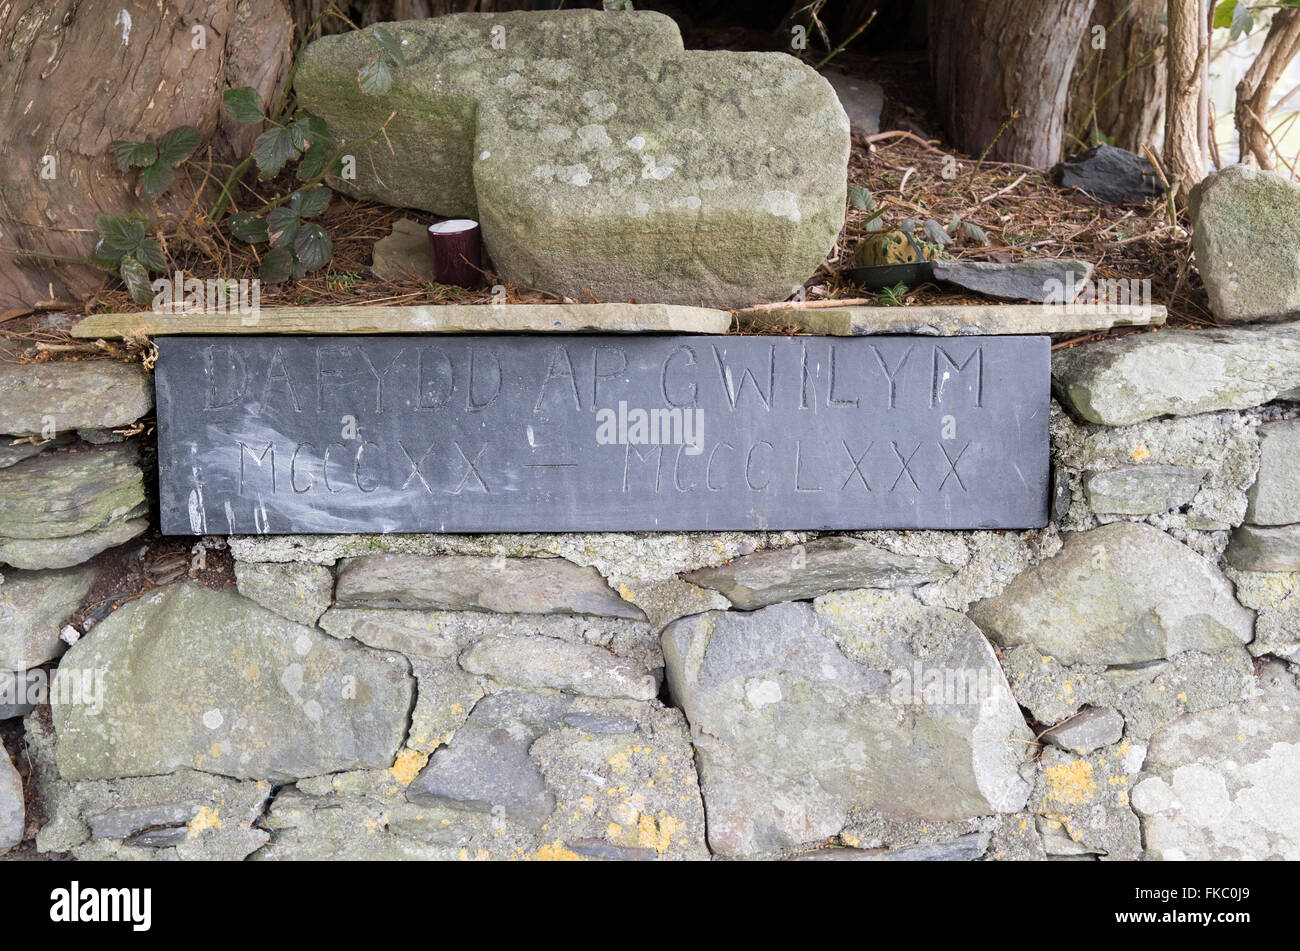 Grave of Dafydd ap Gwilym. Stock Photo